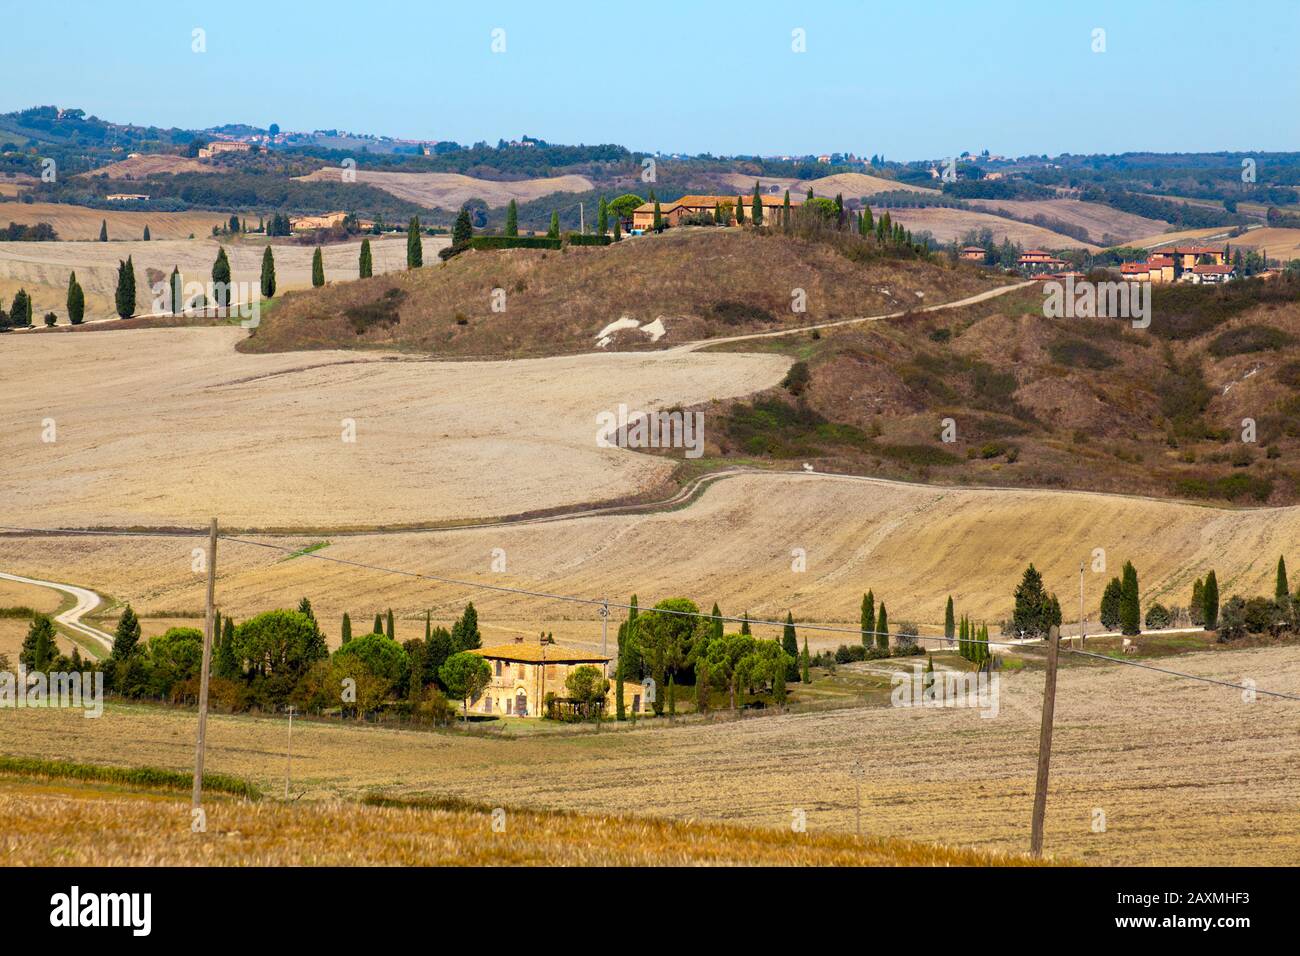 Scenery in the Crete Senesi with houses on hills Stock Photo